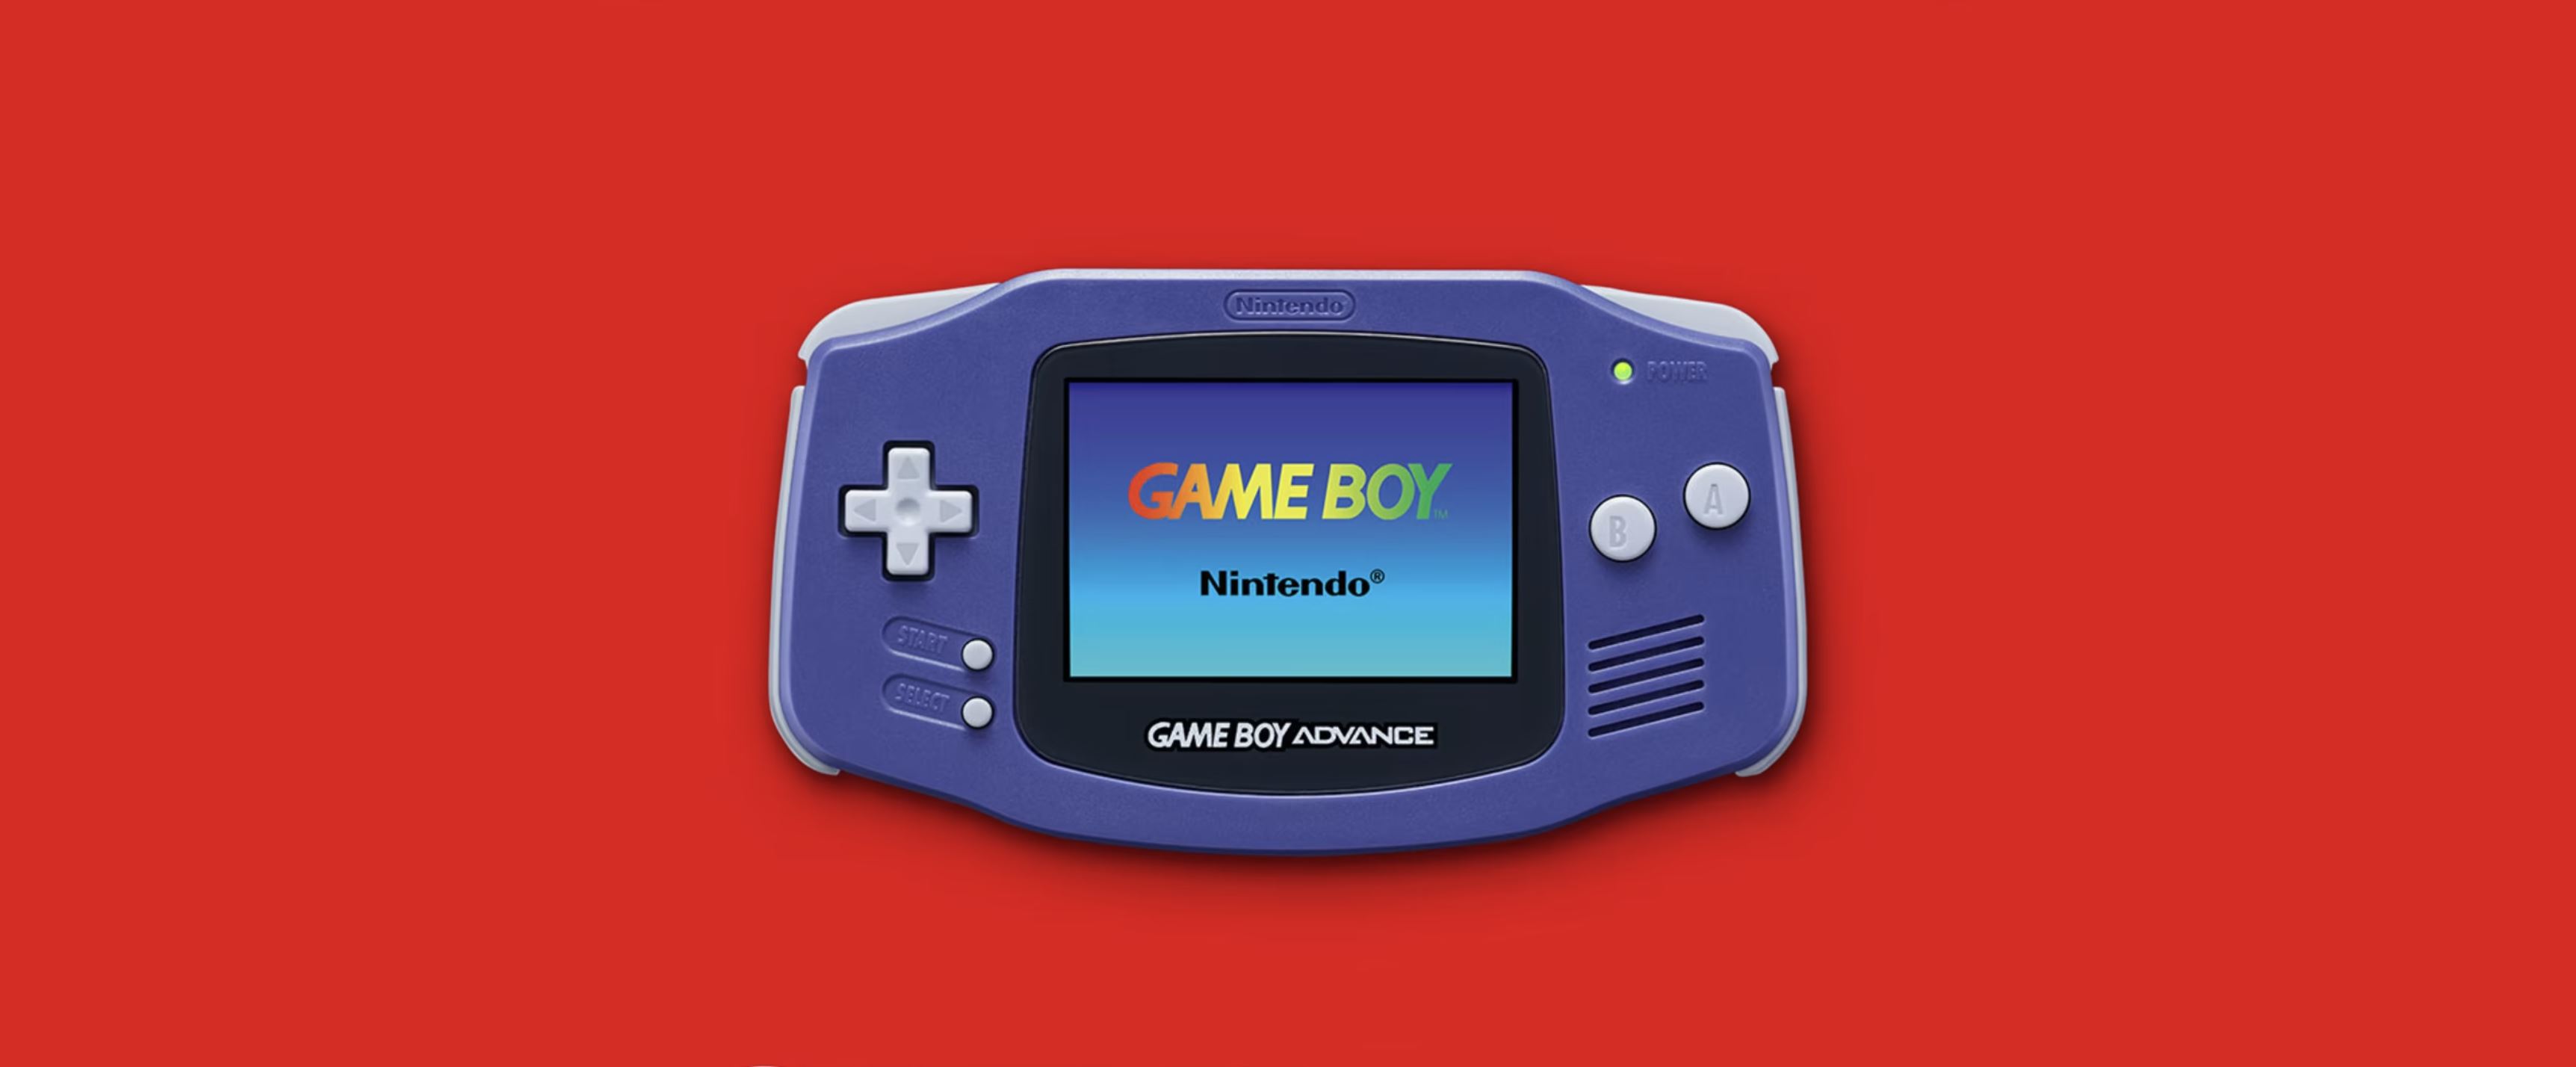 Nintendo Switch's Game Boy Player Isn't As As It Be | Den Geek